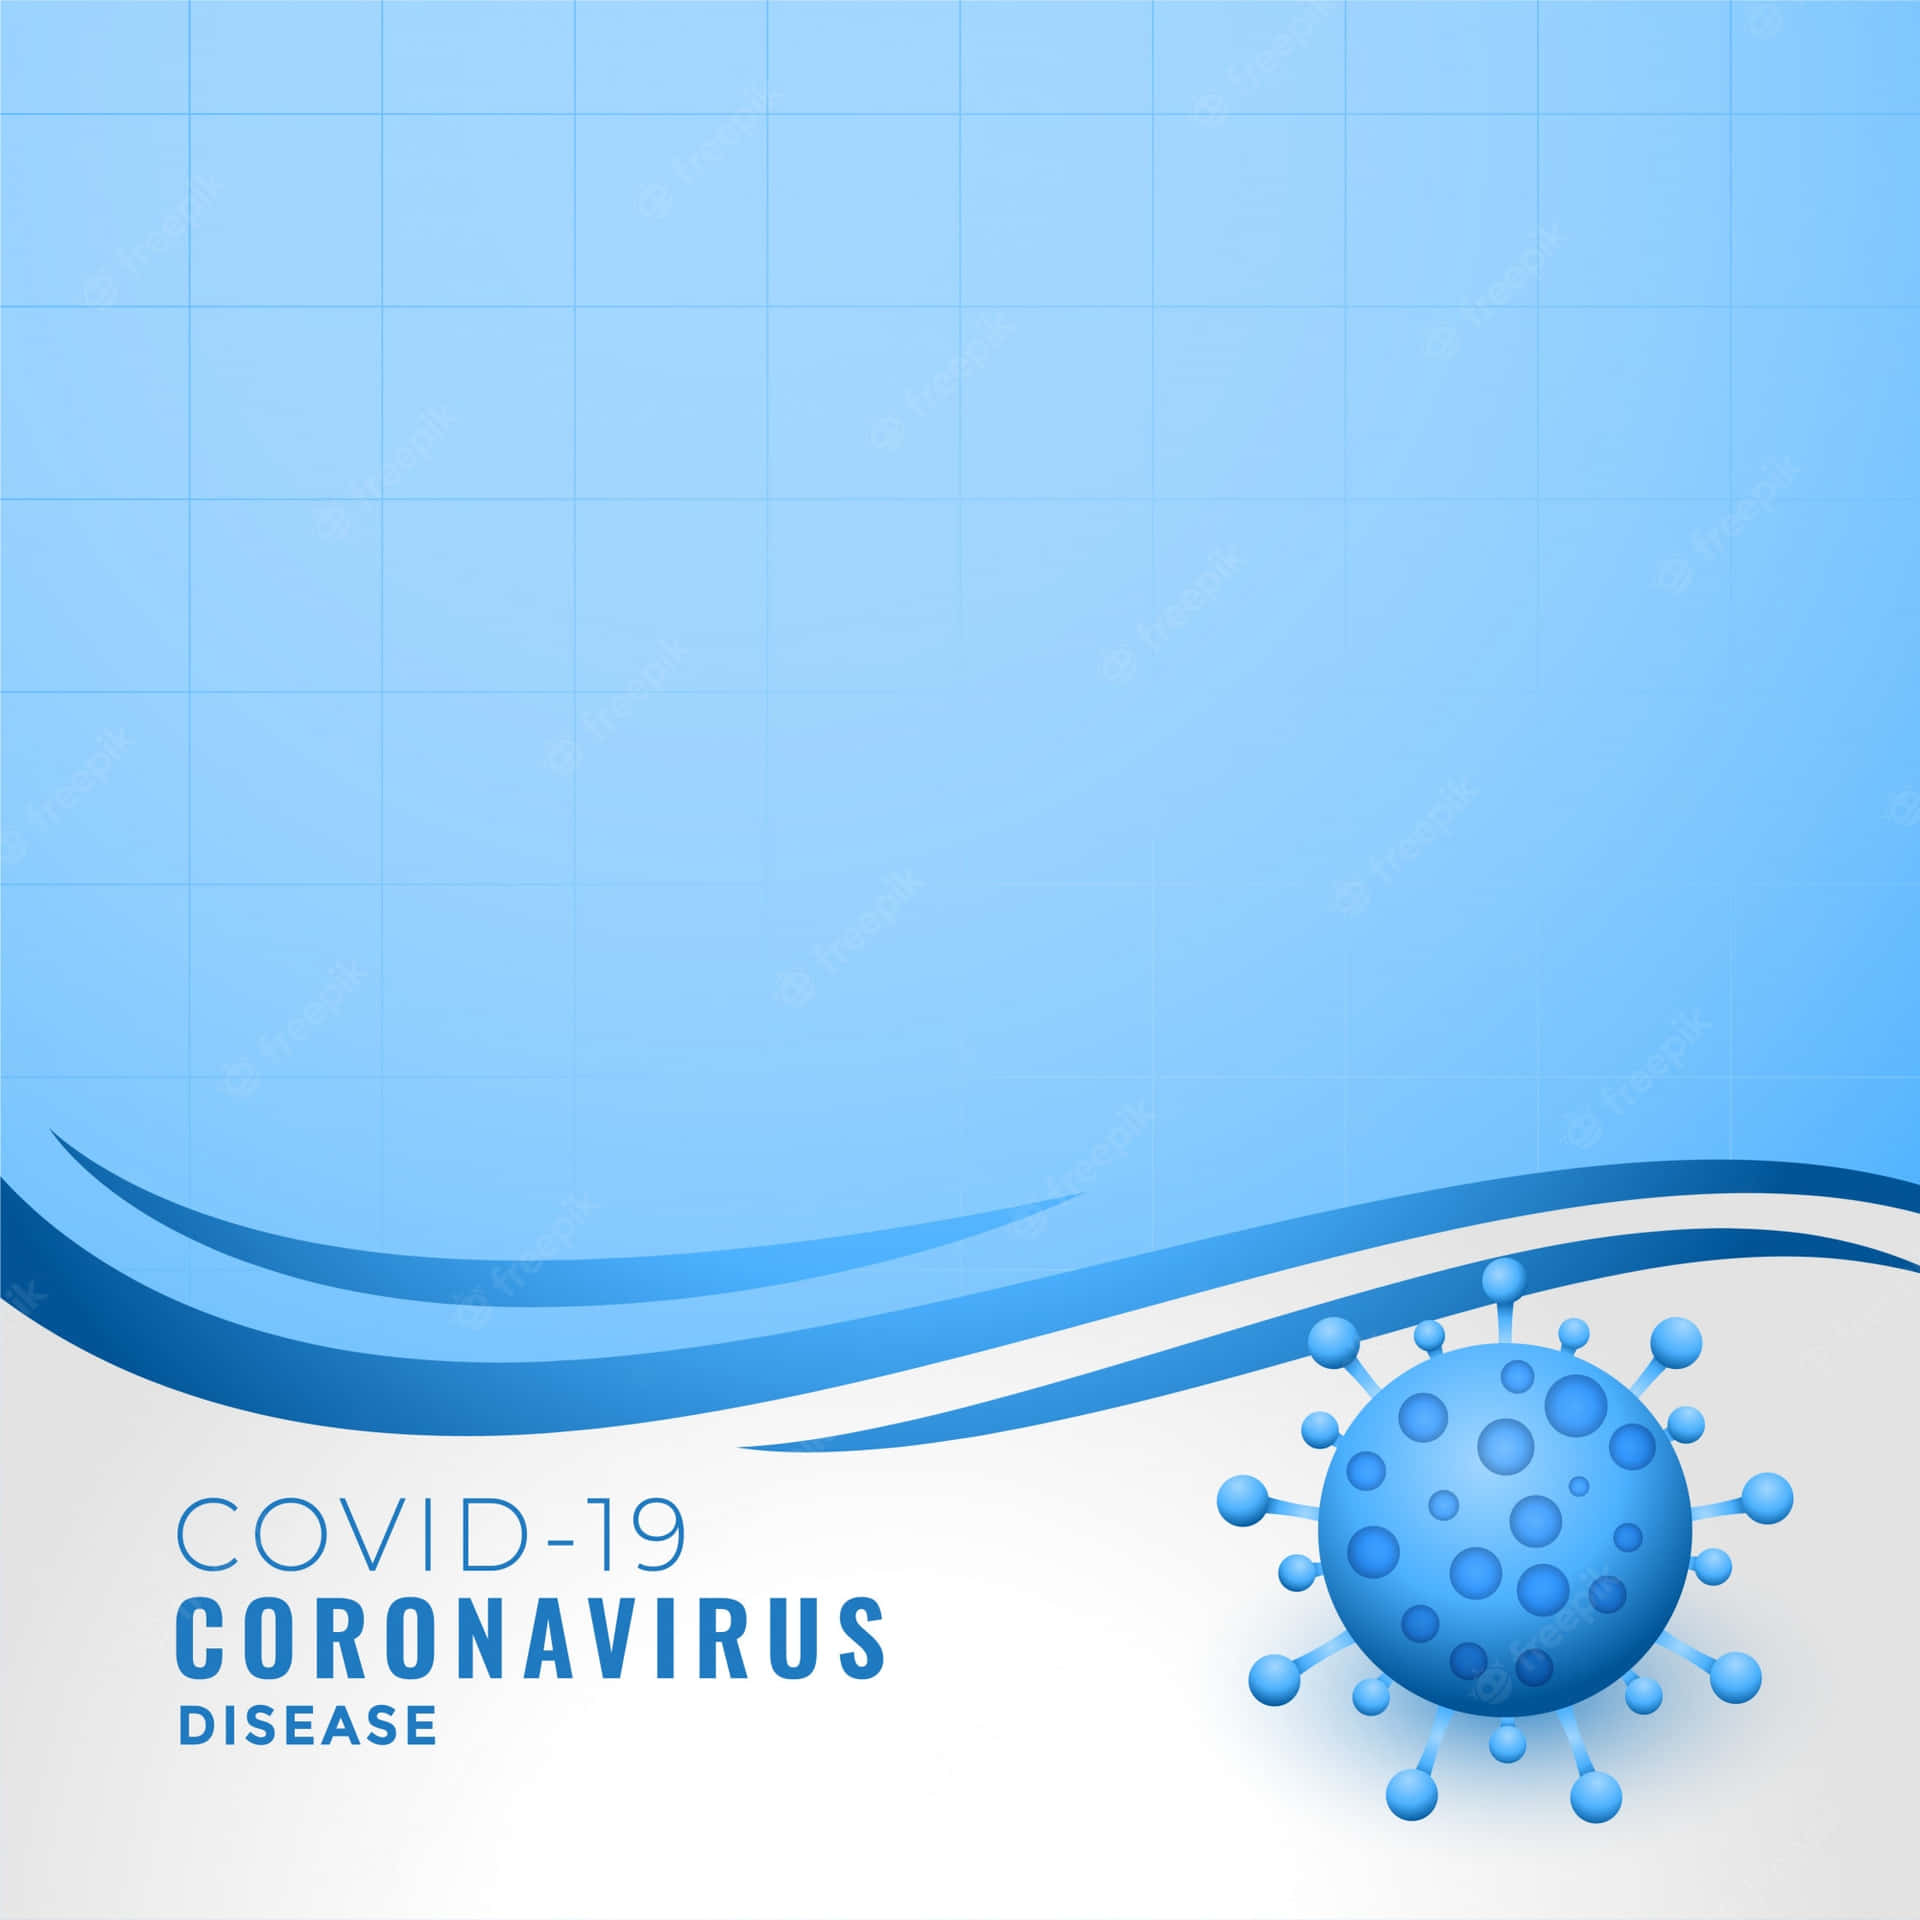 Enfermedaddel Coronavirus, Fondo Azul, Coronavirus, Enfermedad Del Coronavirus, Coronavirus, Enfermedad Del Coronavirus, Cor